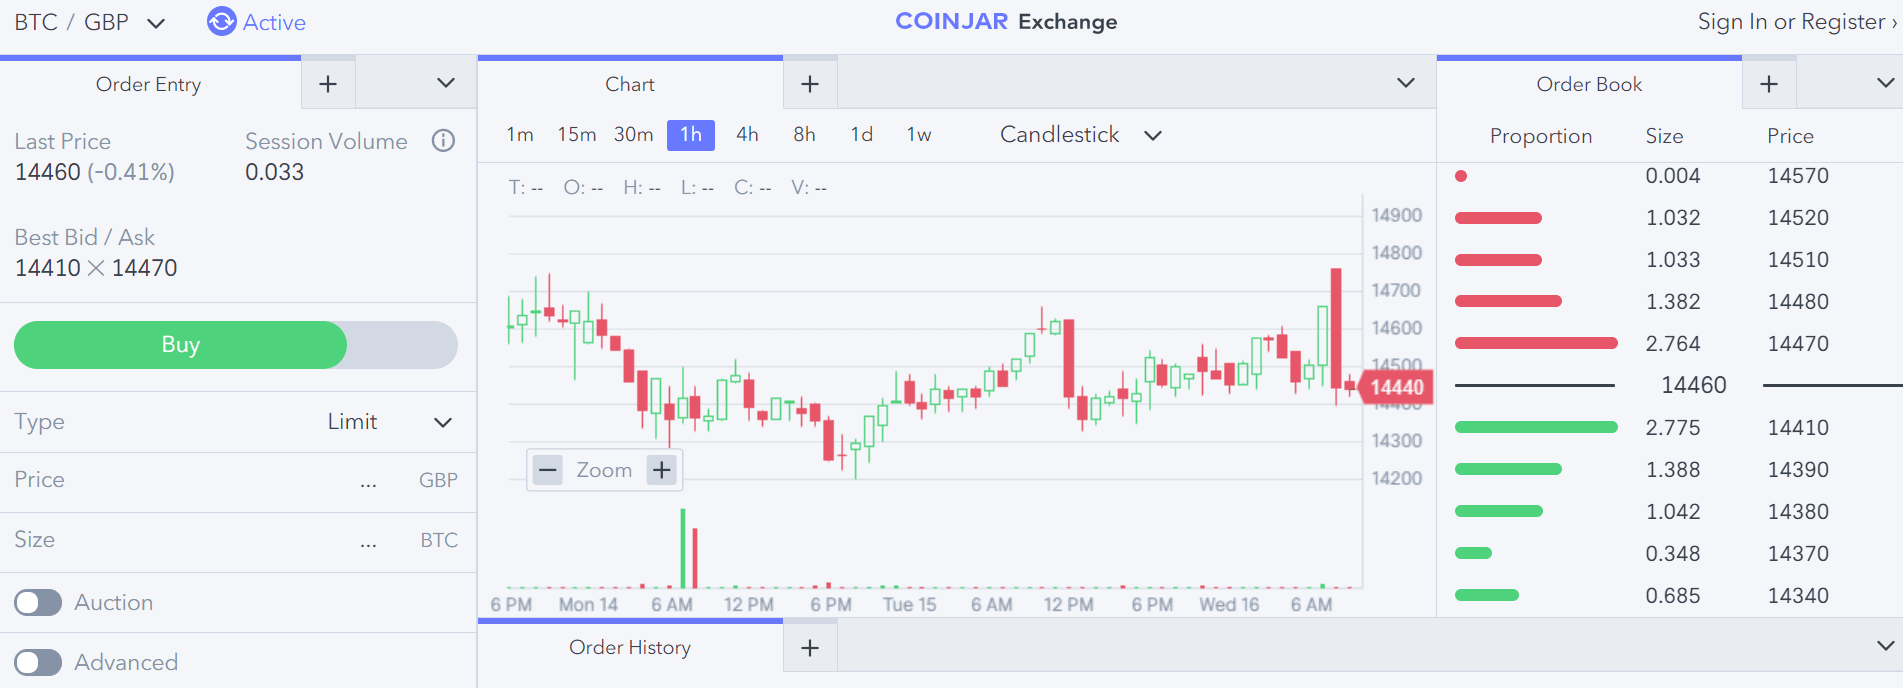 coinjar exchange platform